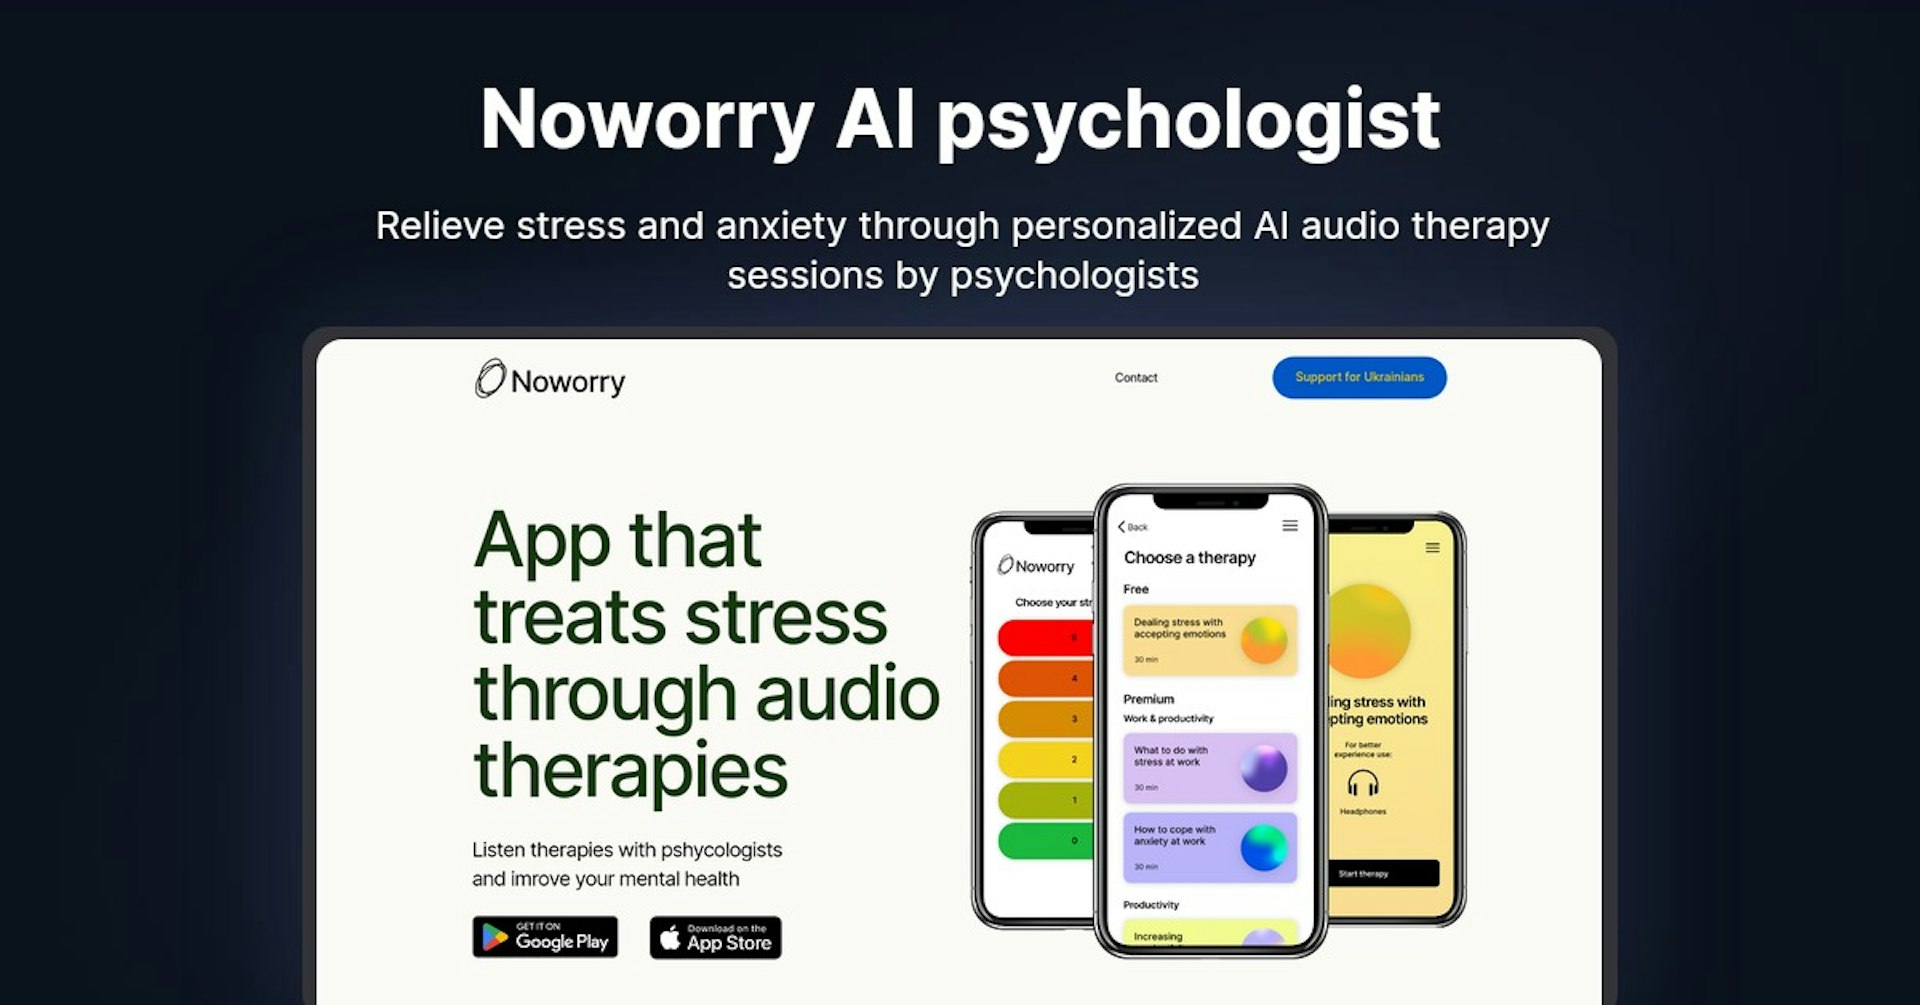 Noworry AI psychologist